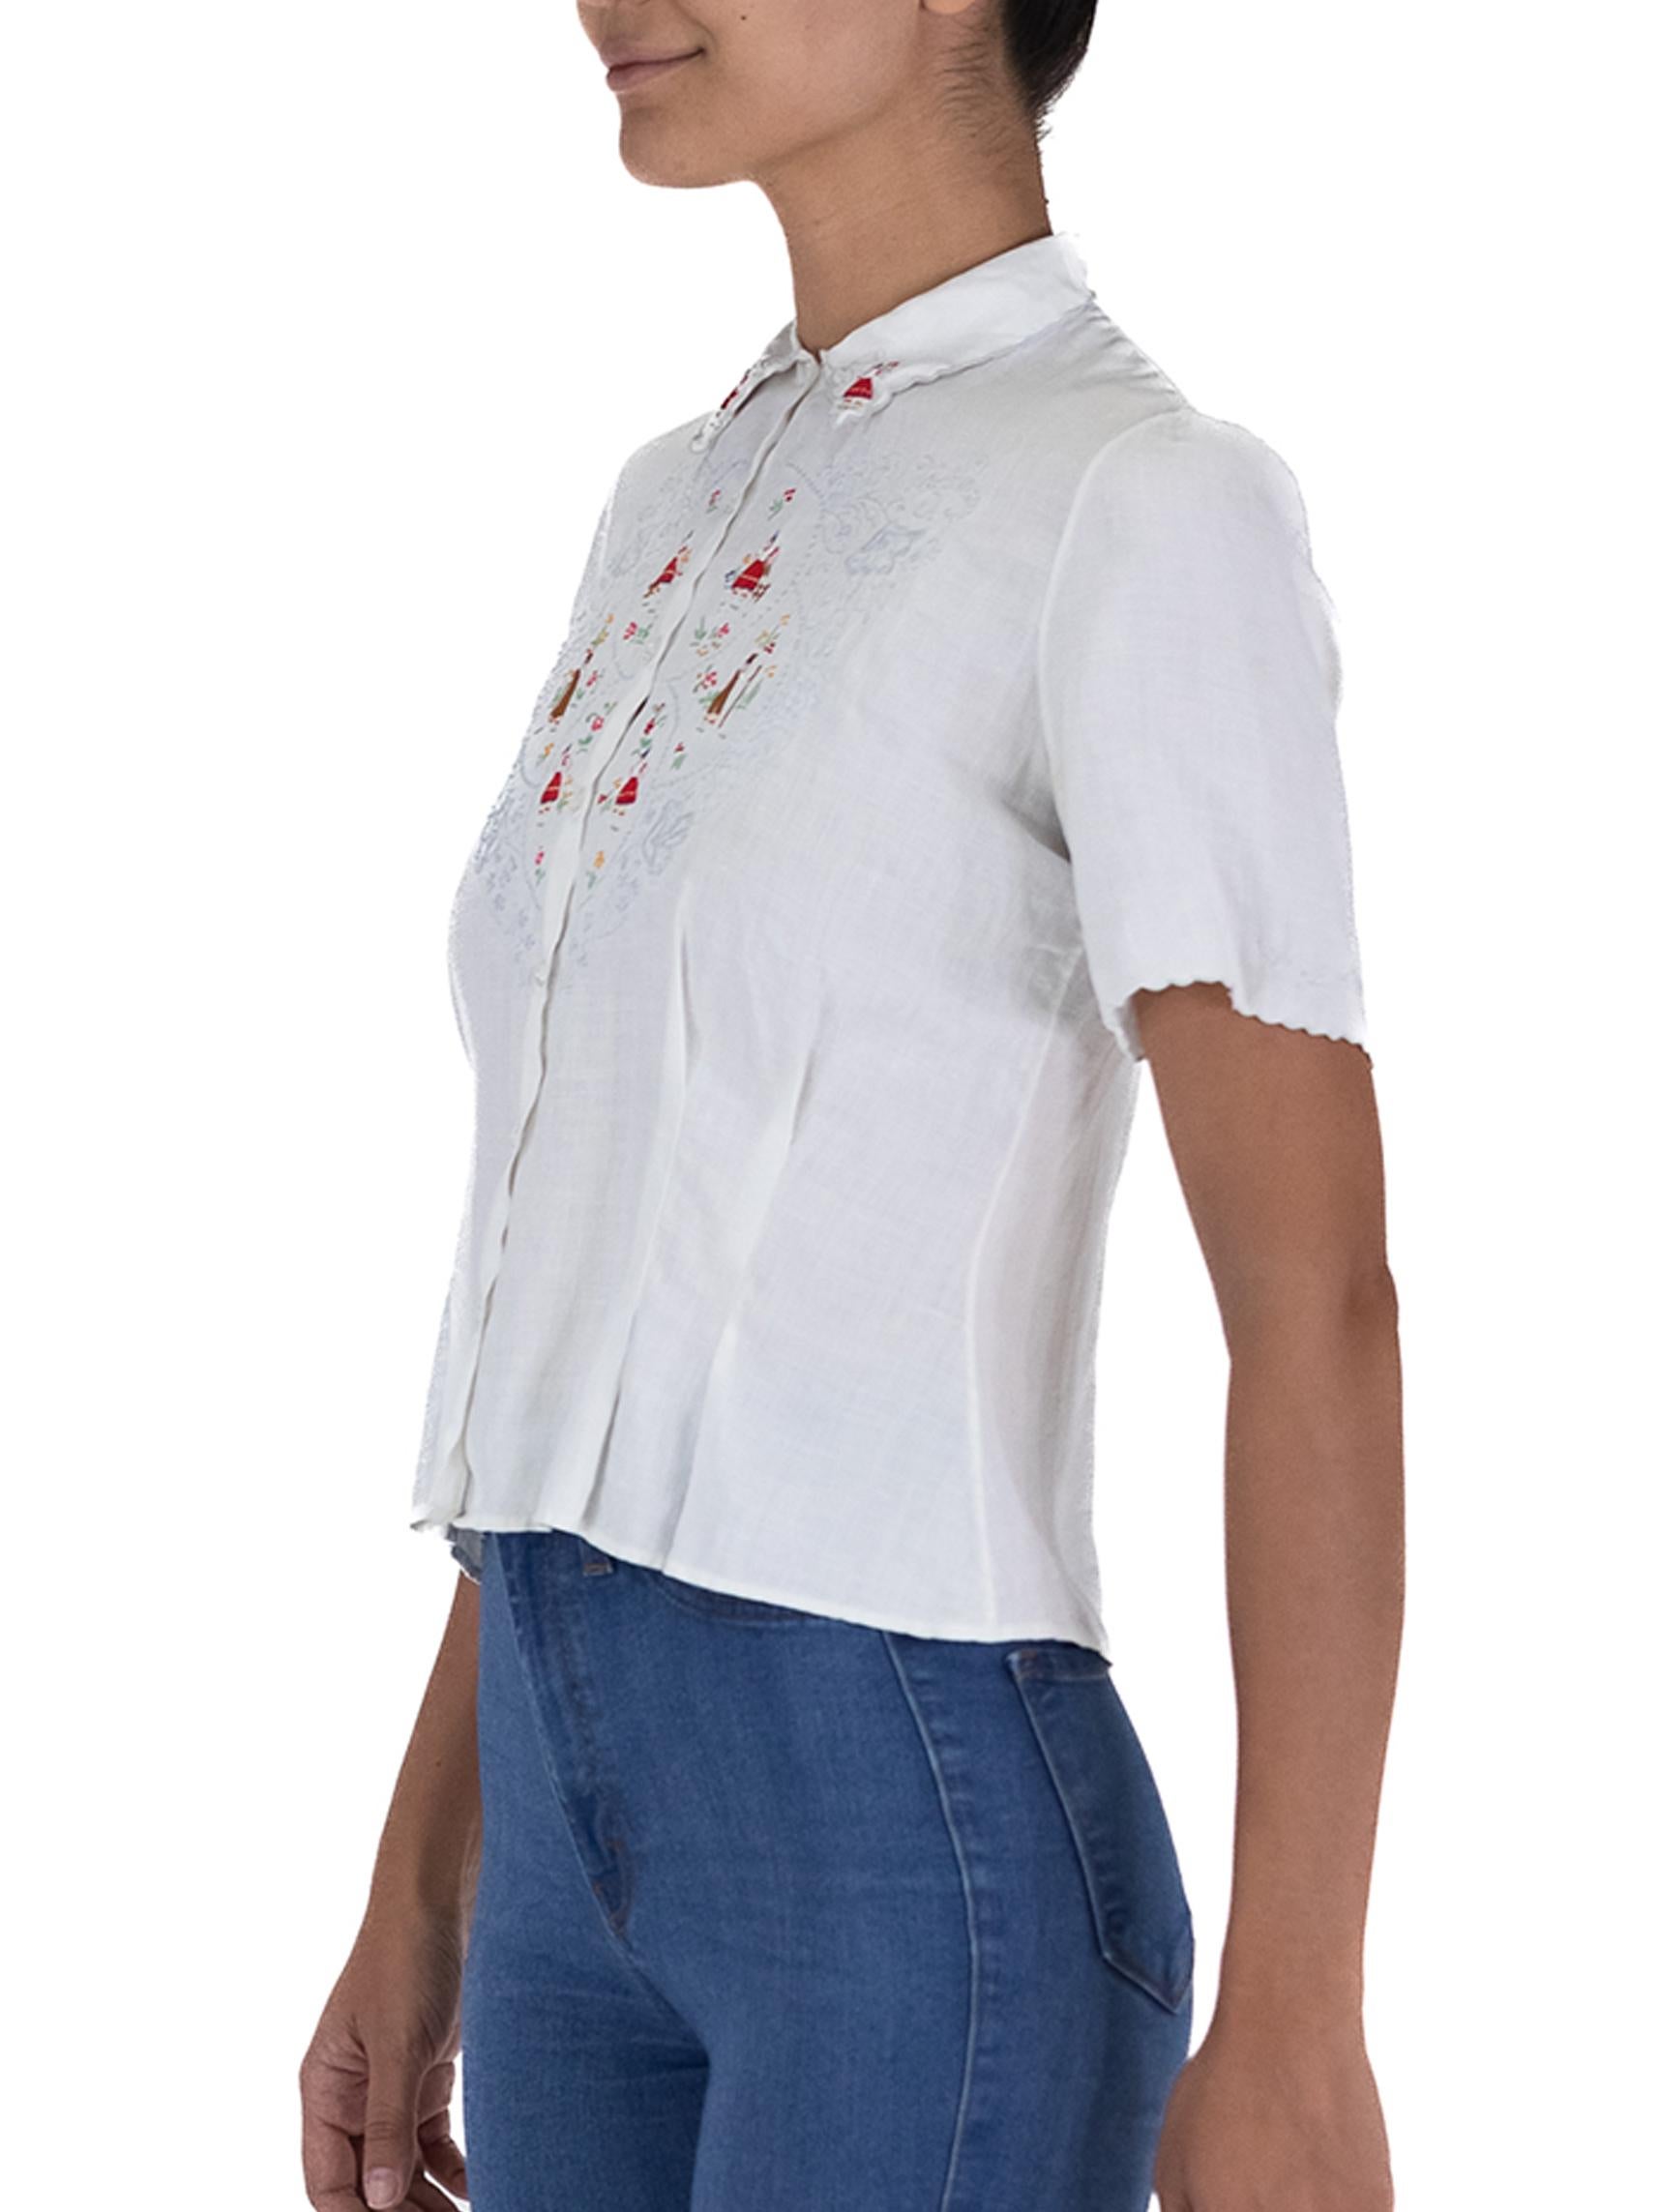 1940s white blouse